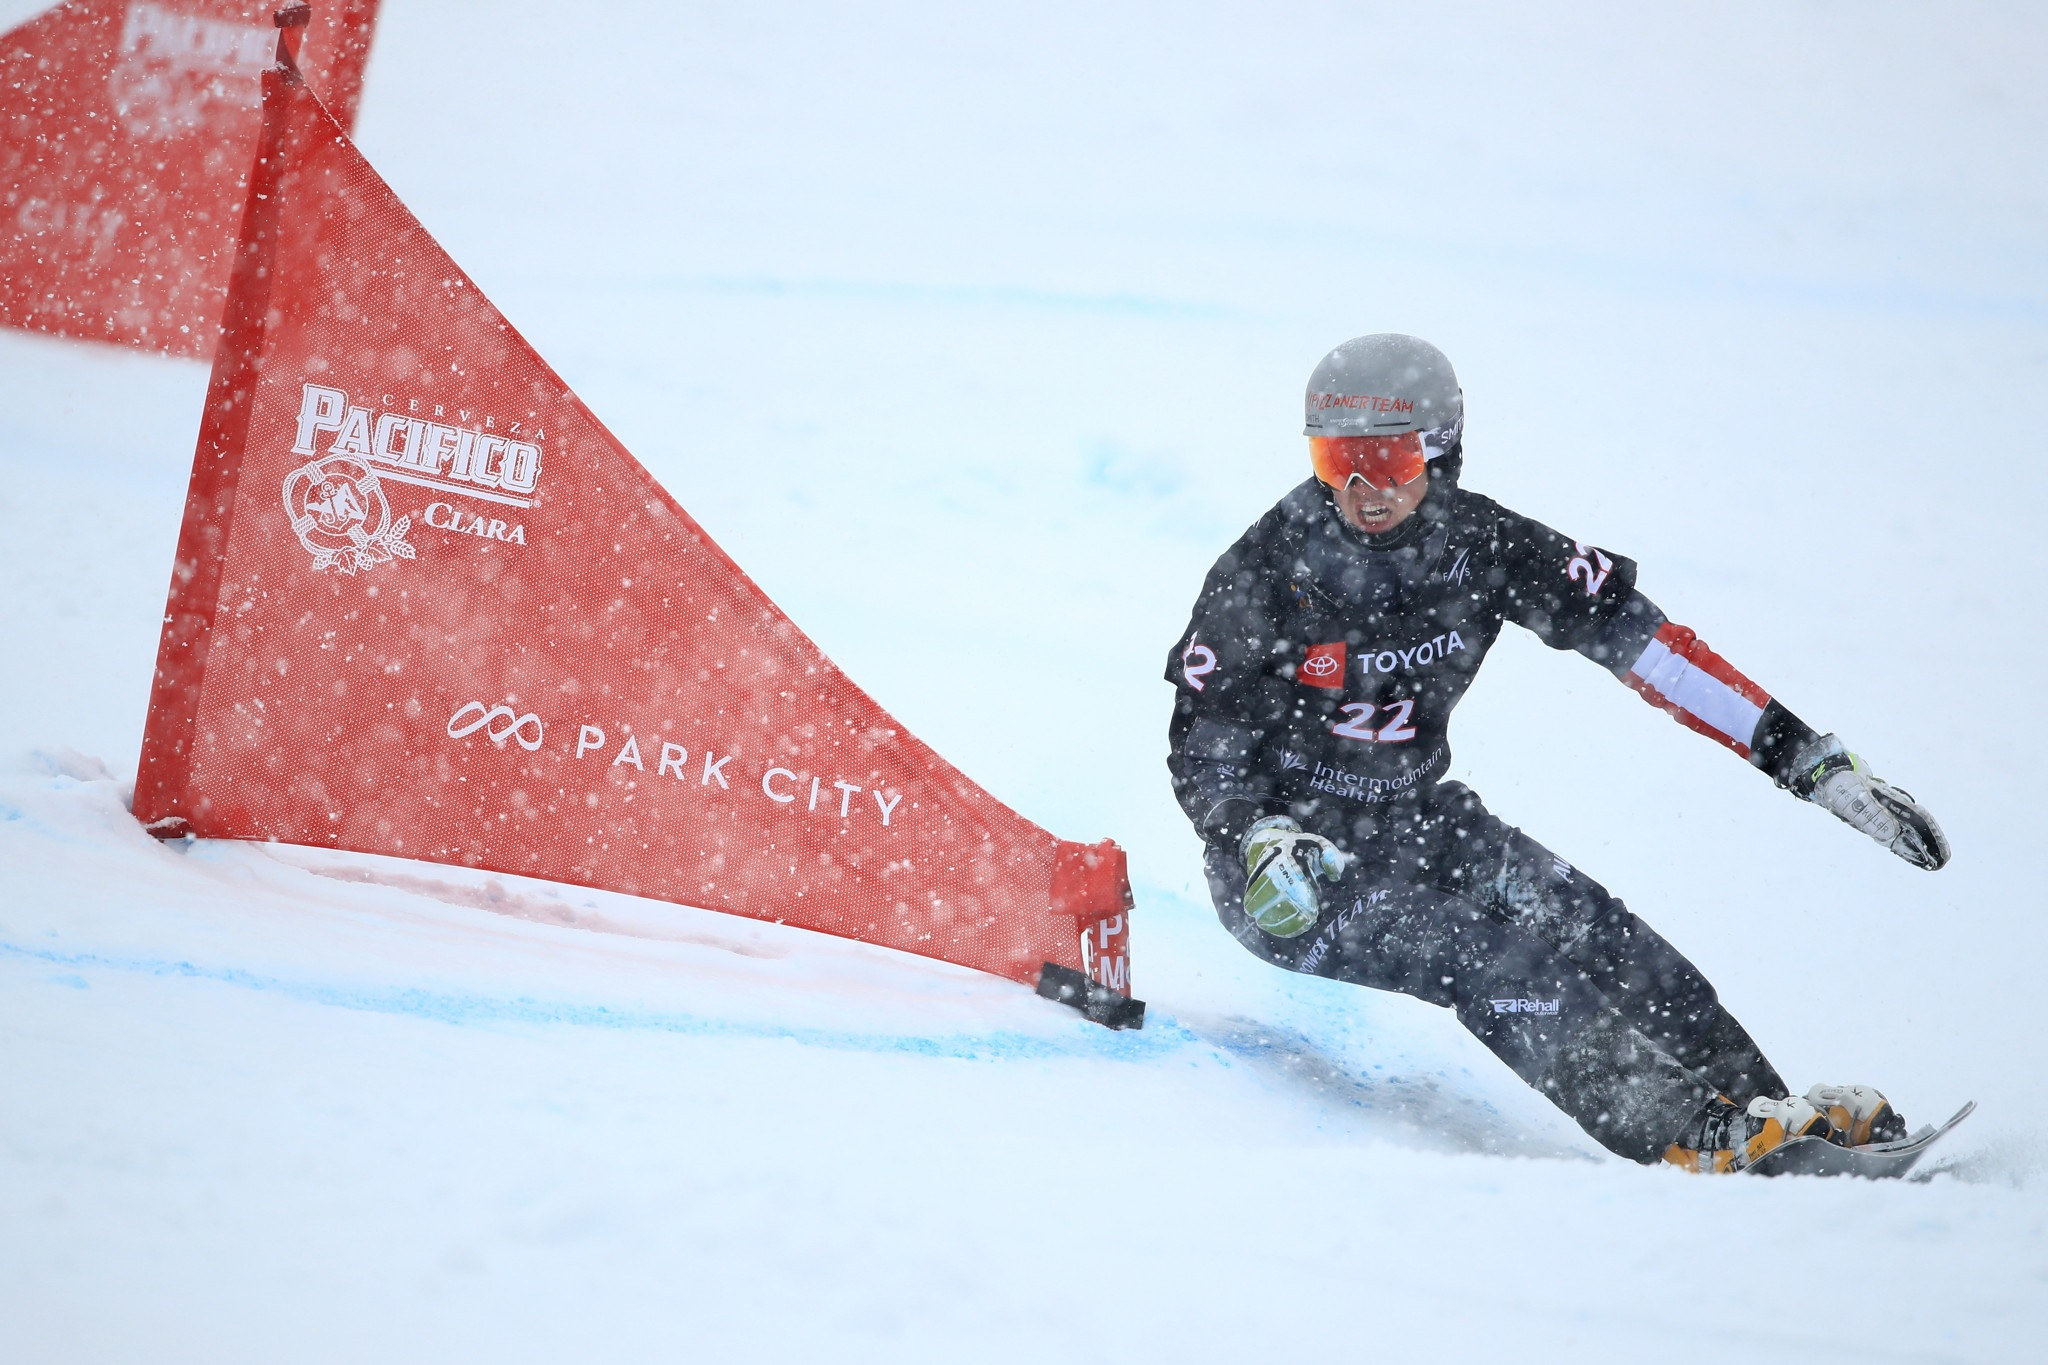 Mixed team title seals hat-trick for Austria at Bad Gastein Snowboard World Cup